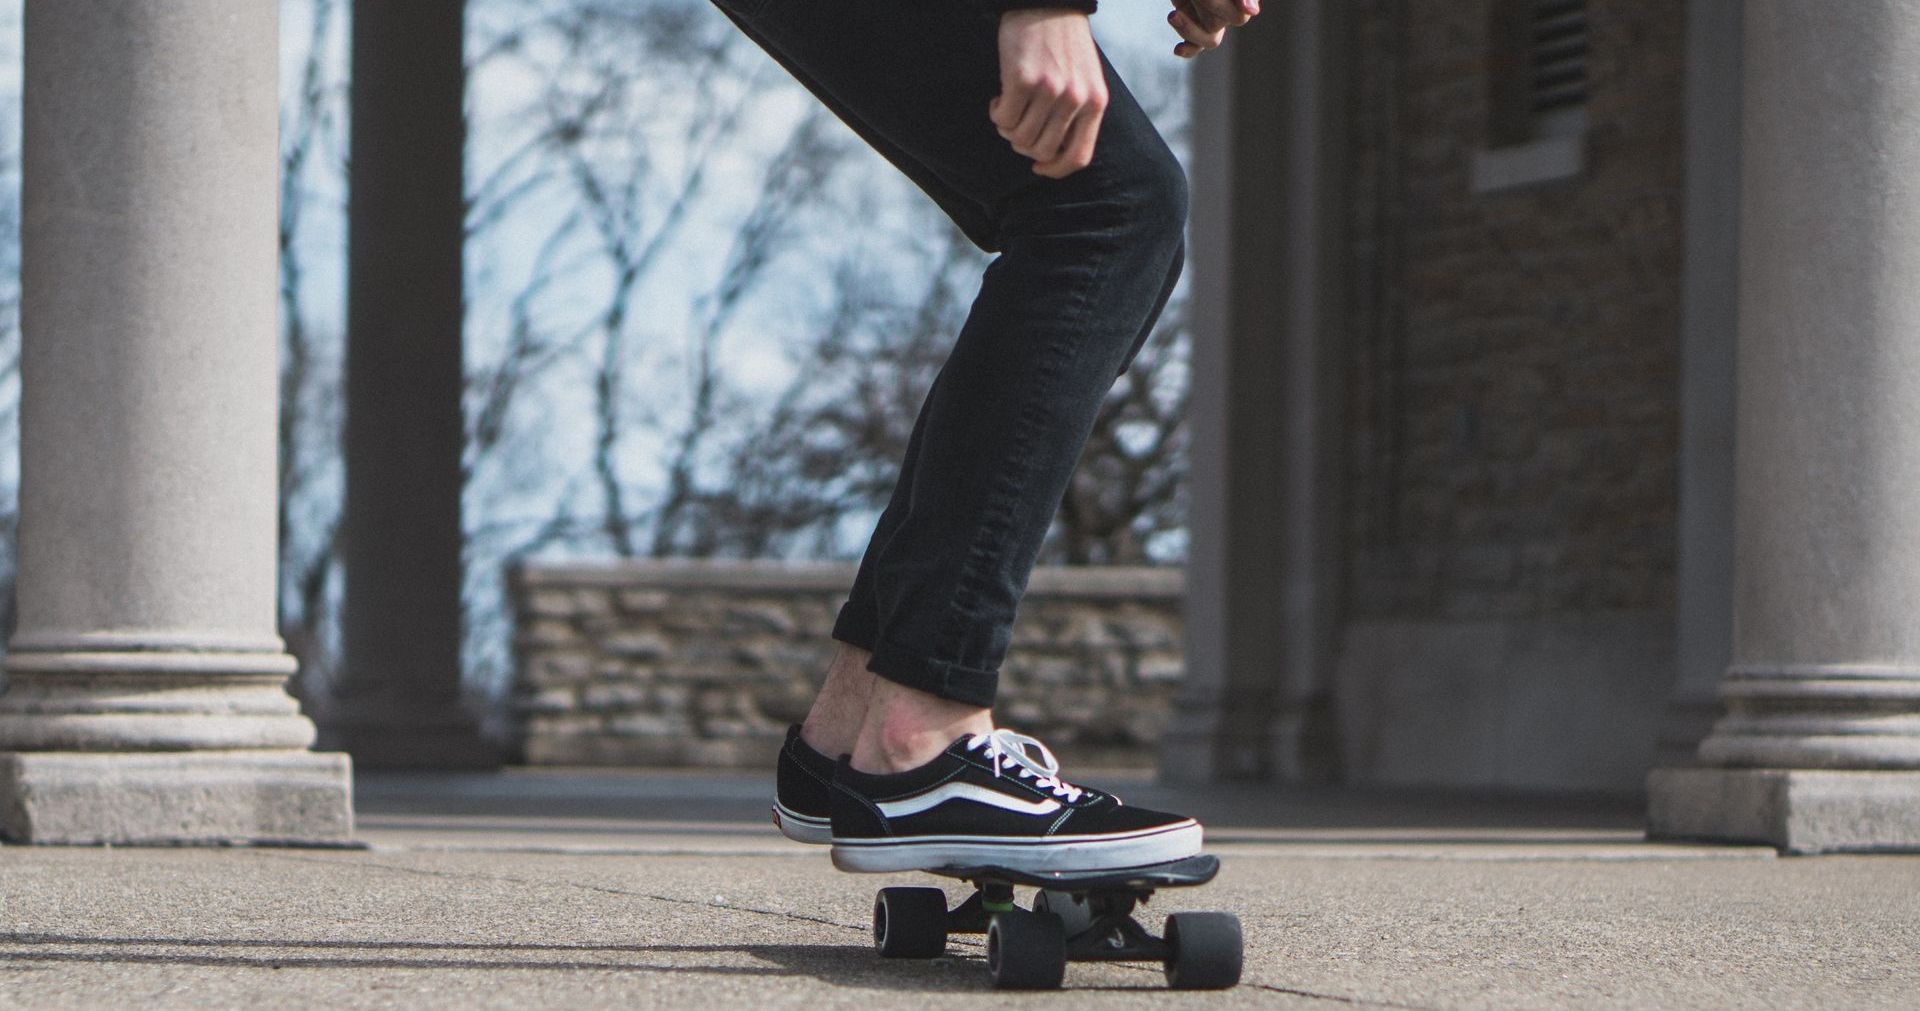 person riding skateboard